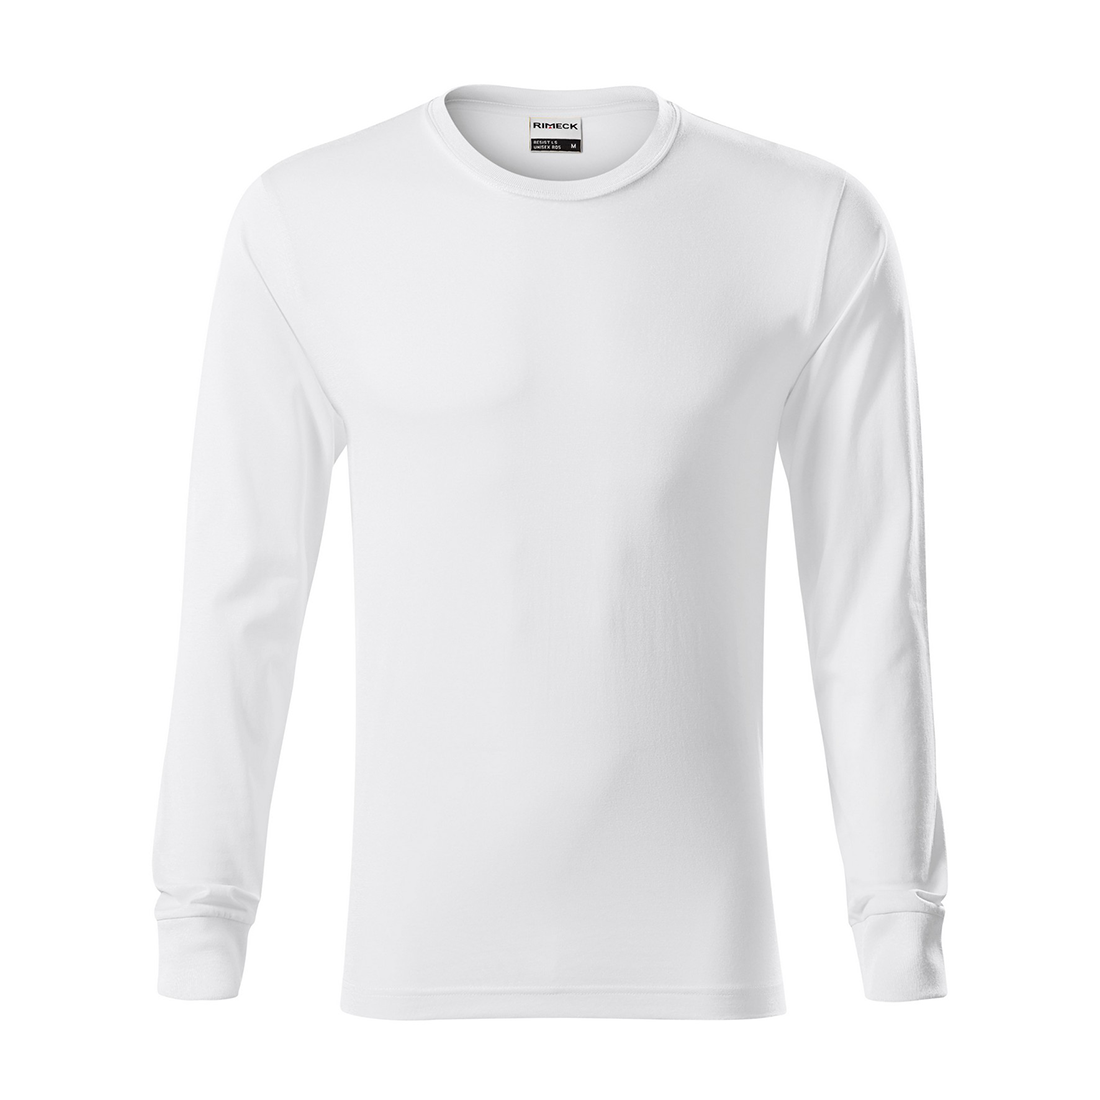 Unisex-T-Shirt Lange Ärmel - Arbeitskleidung